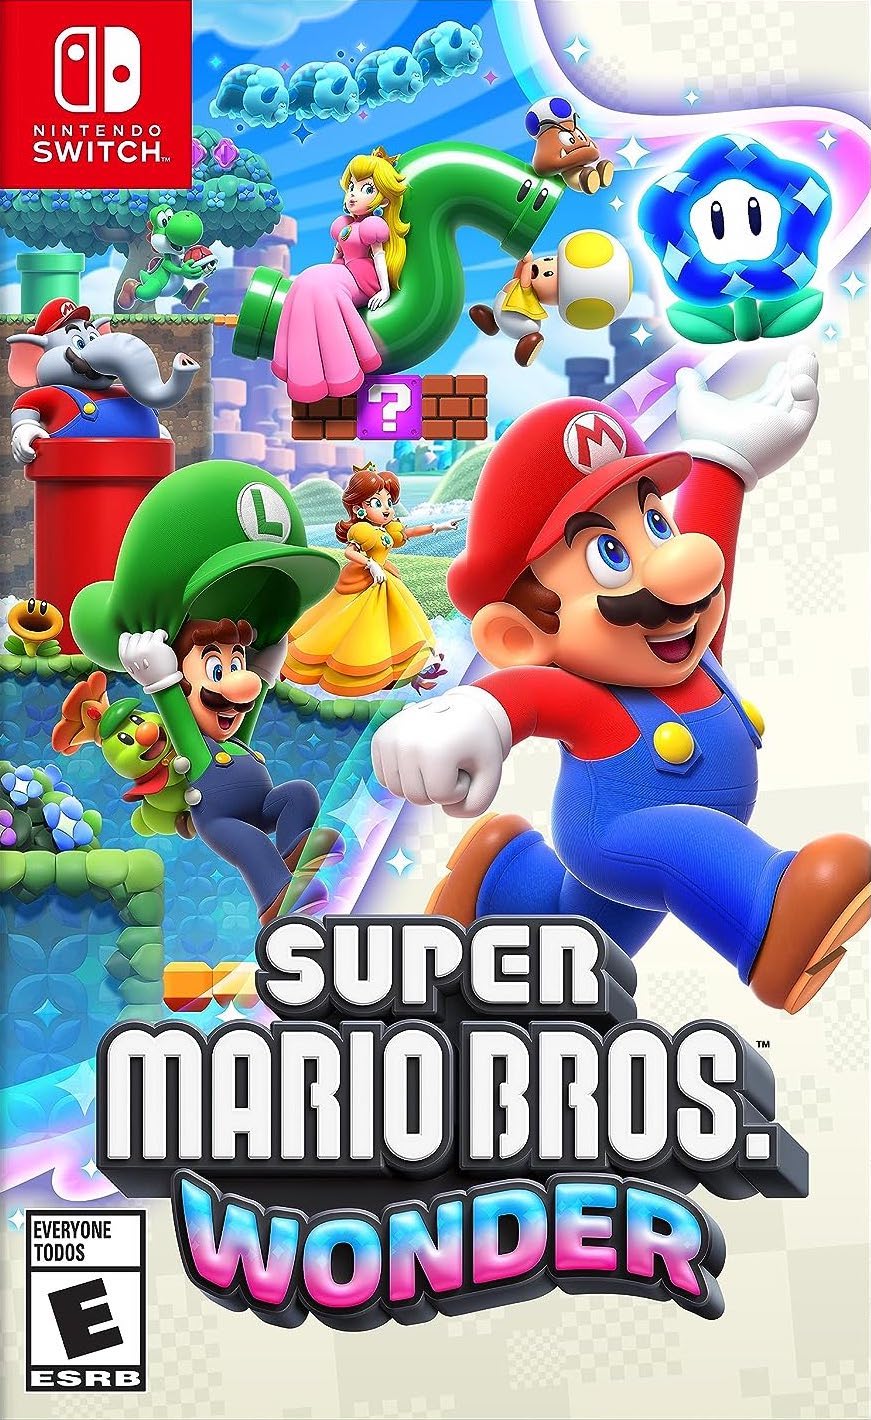 Super Mario Bros Wonder + Super Mario RPG Bundle 2 Game Pack